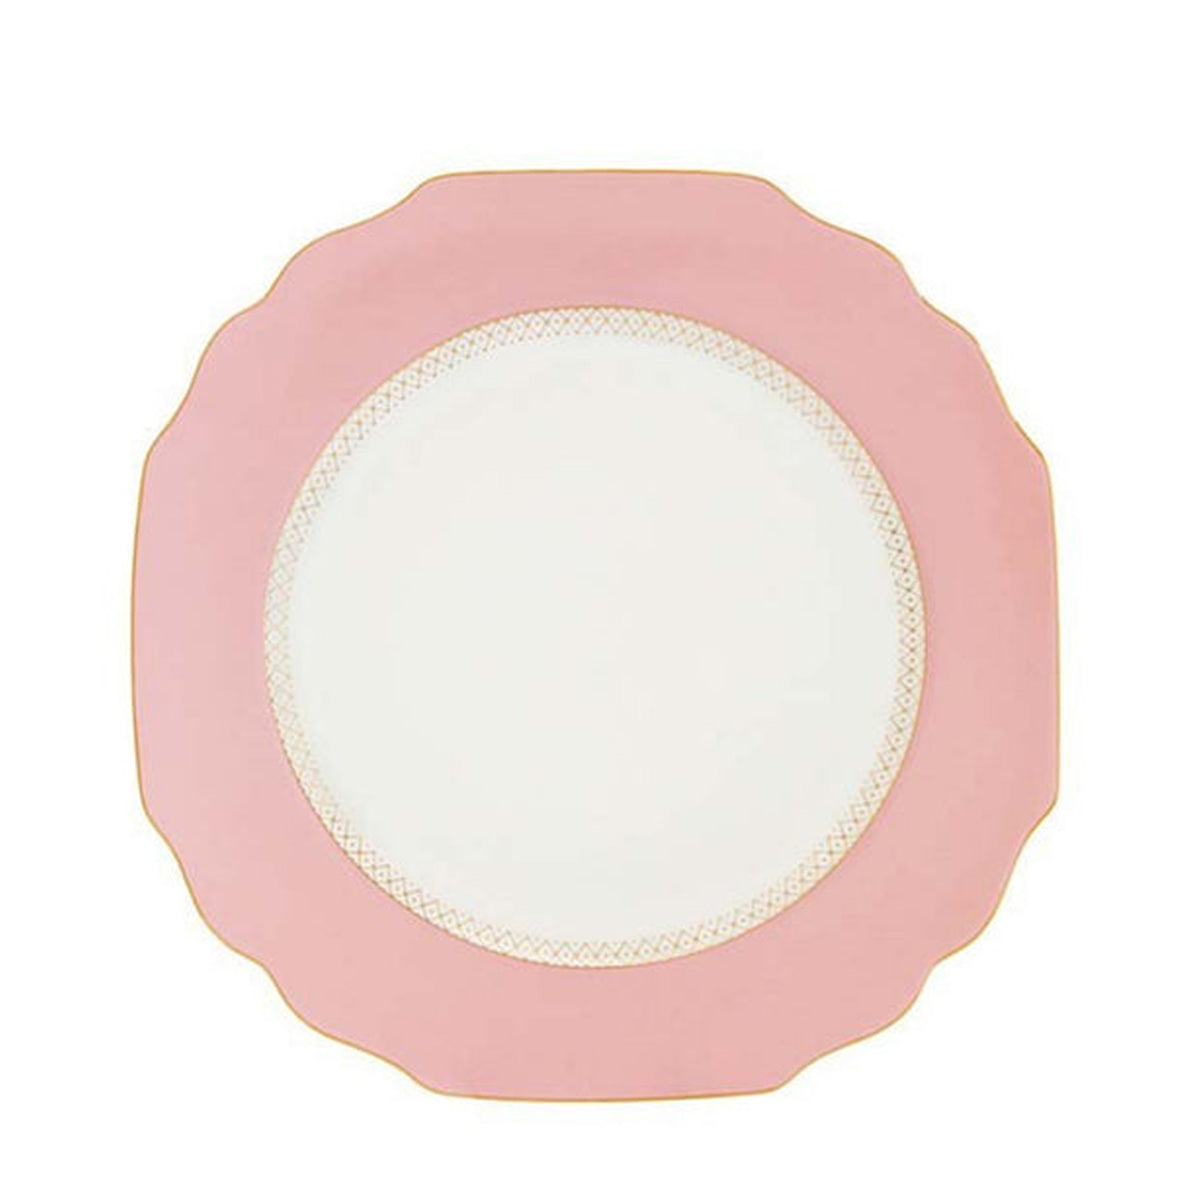 Dinner plate fi 27 cm pink